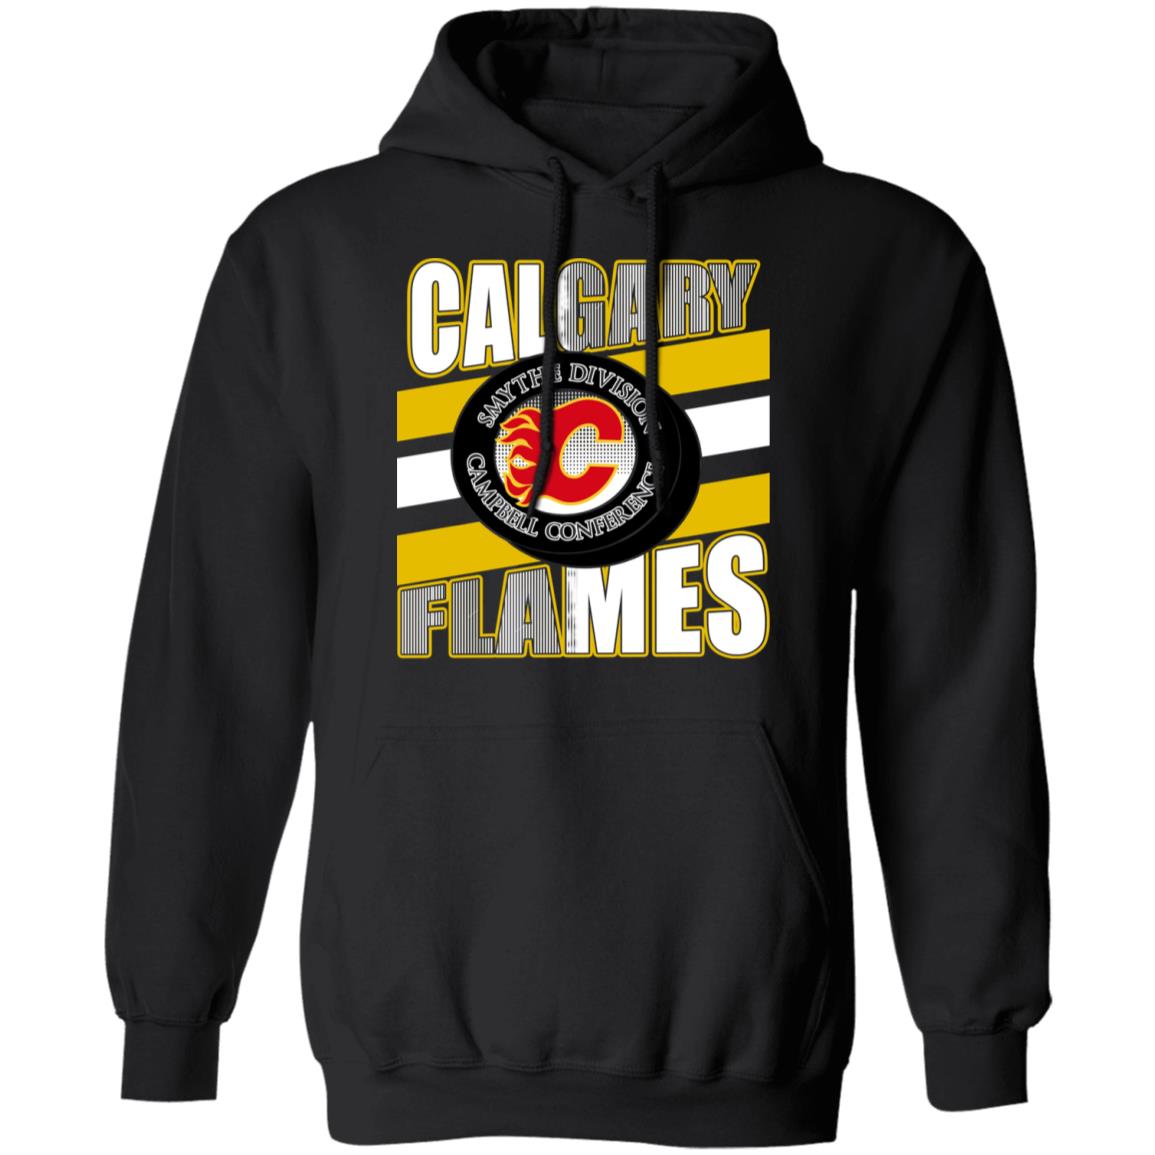 Calgary Flames Black Hooded Sweatshirt